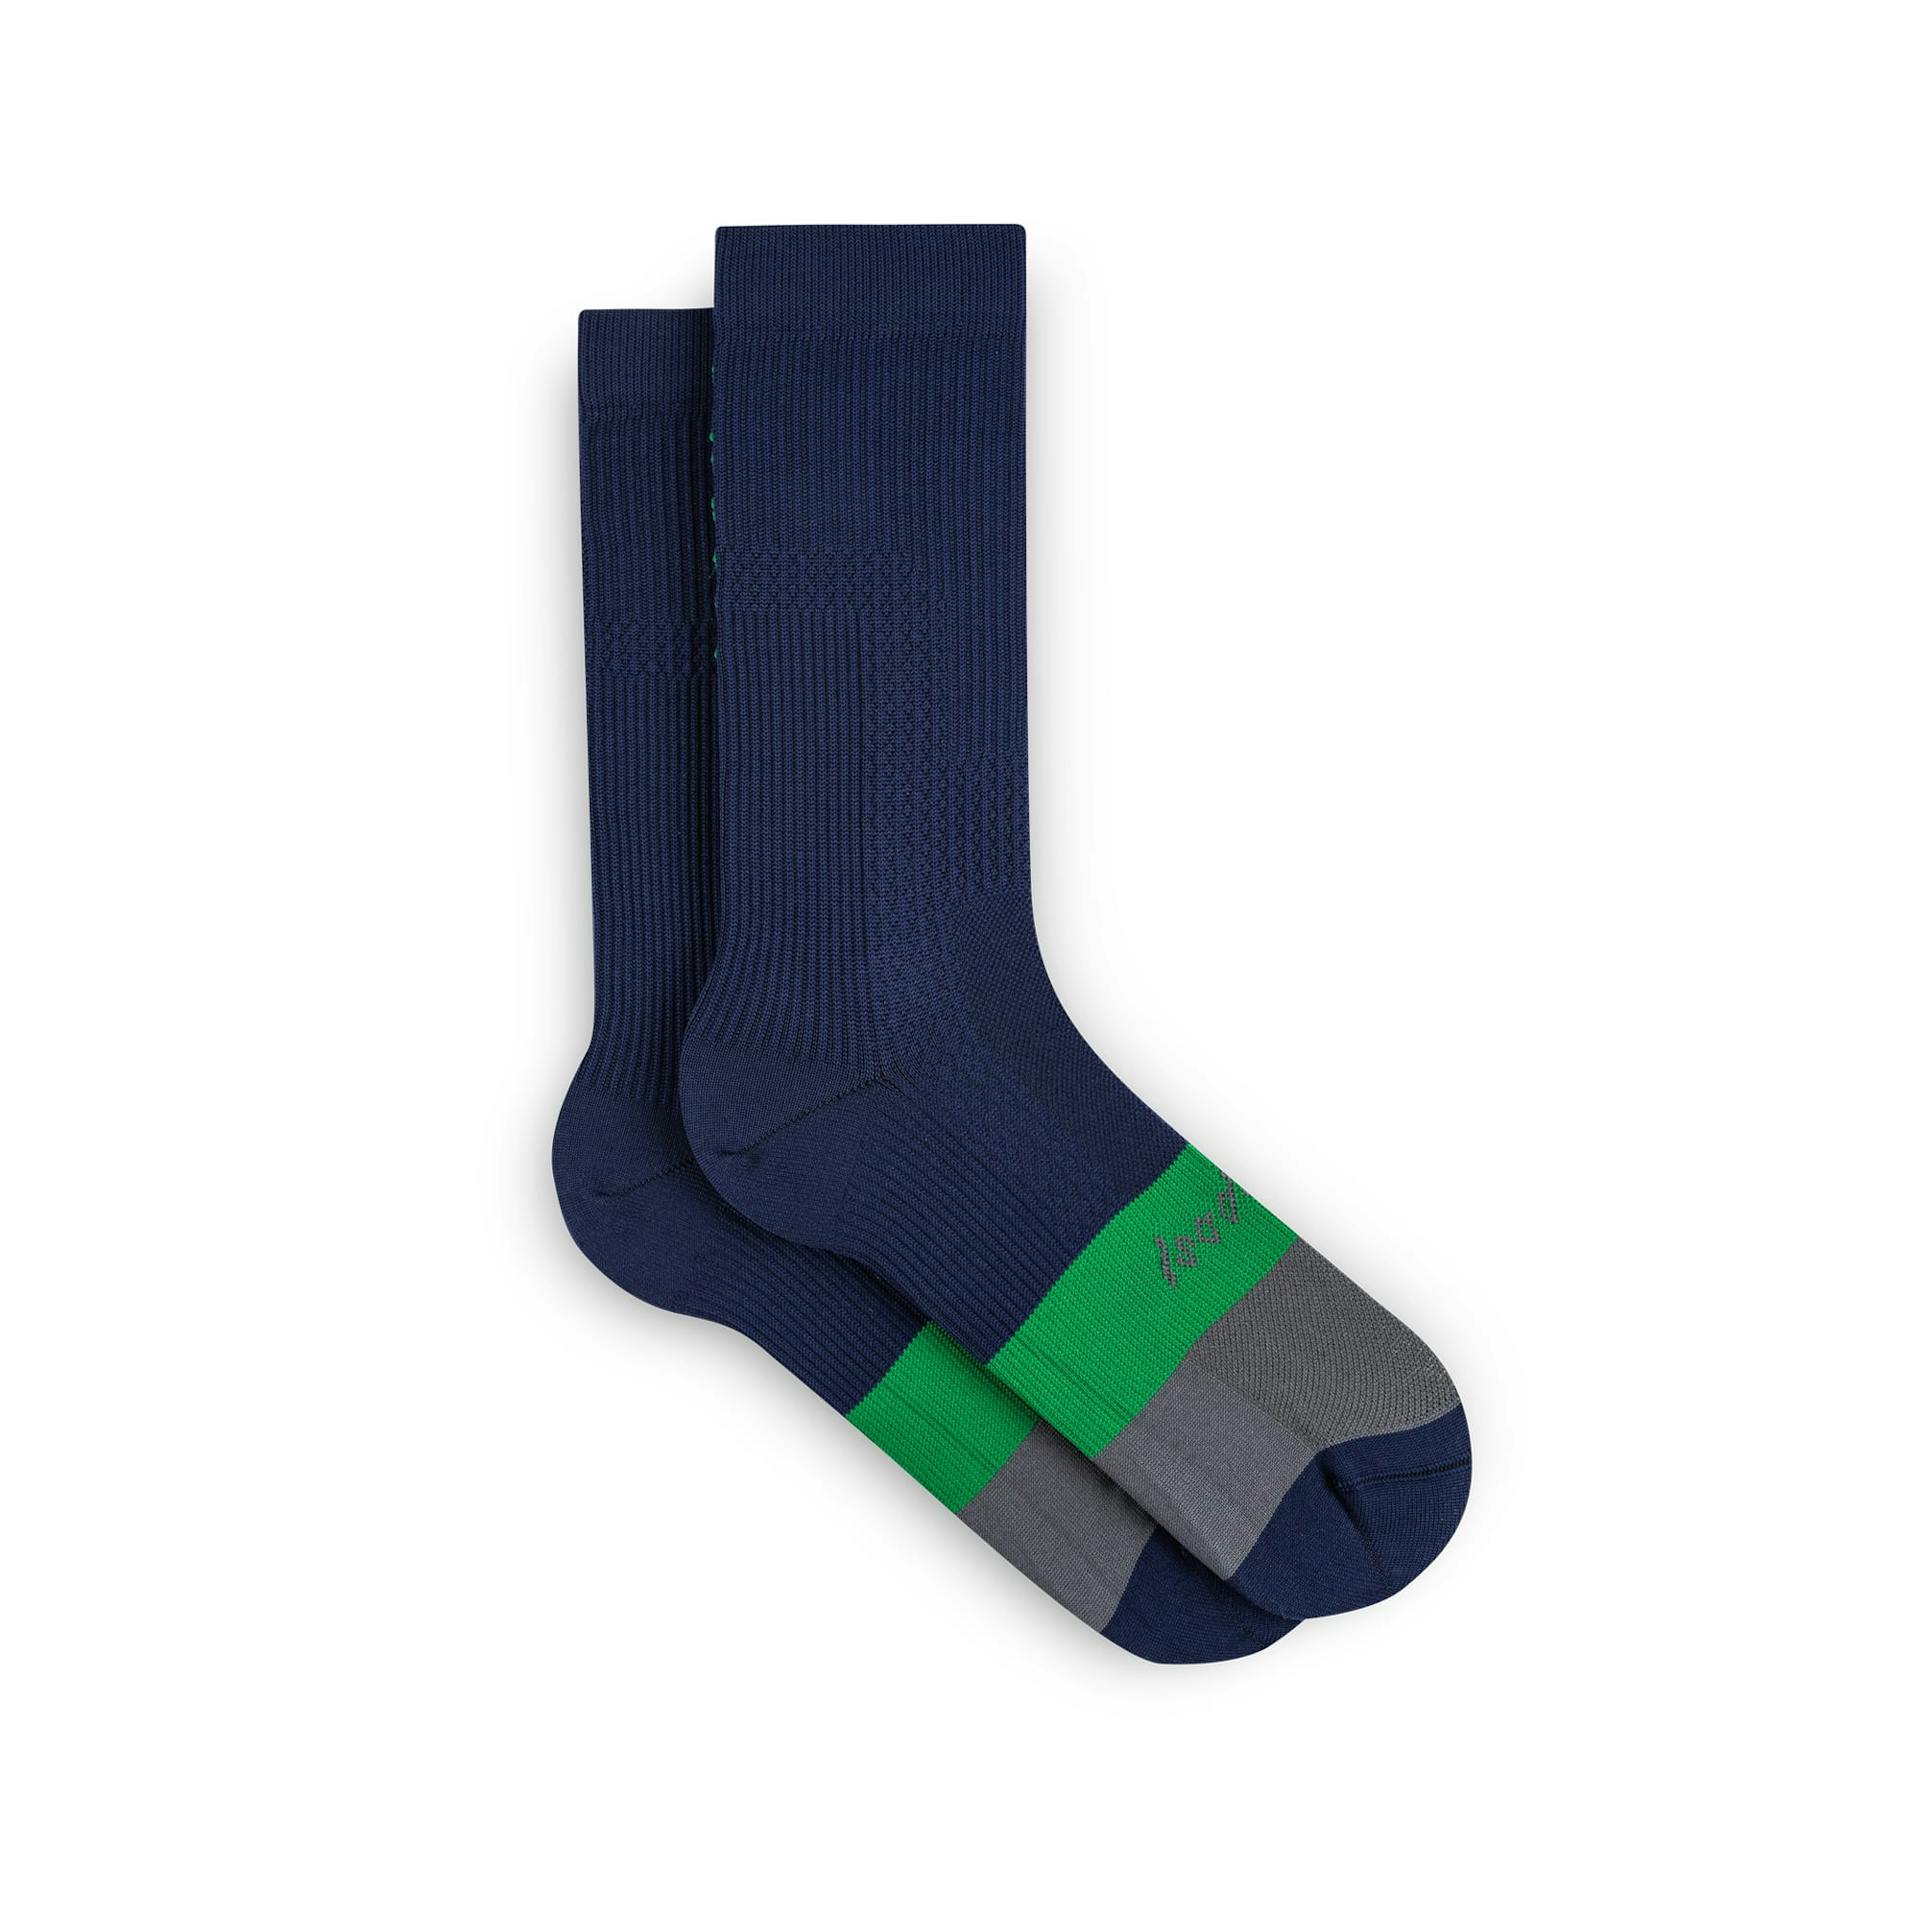 Alternative Socks - Navy
                        